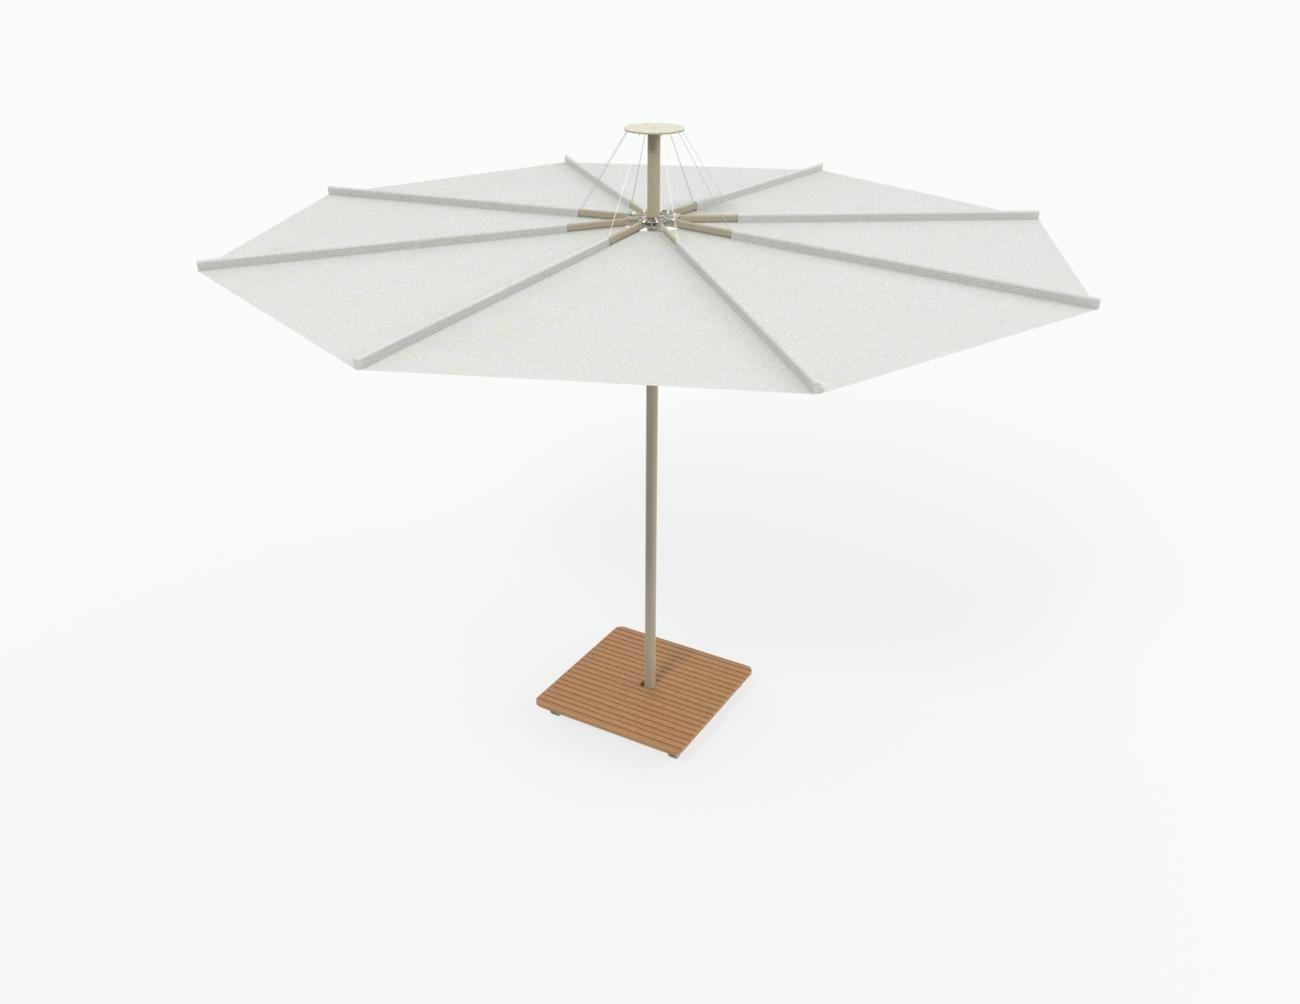 Infina UX Latte parasol de jardin